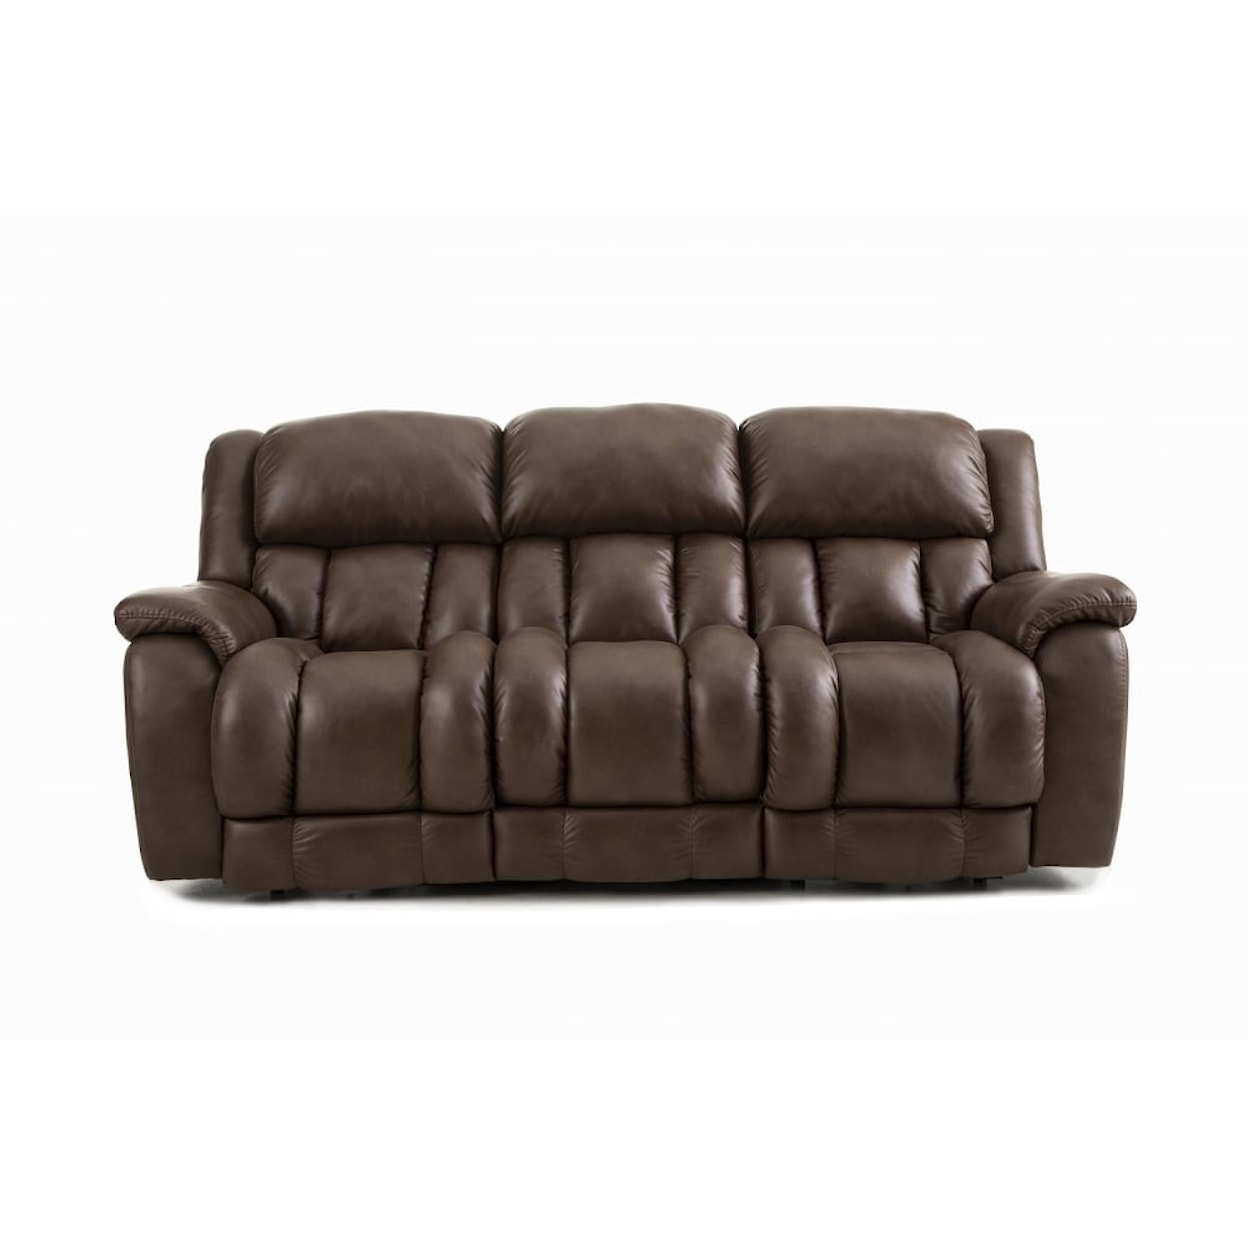 HomeStretch 229 Zero-G Sofa with Headrest & Lumbar